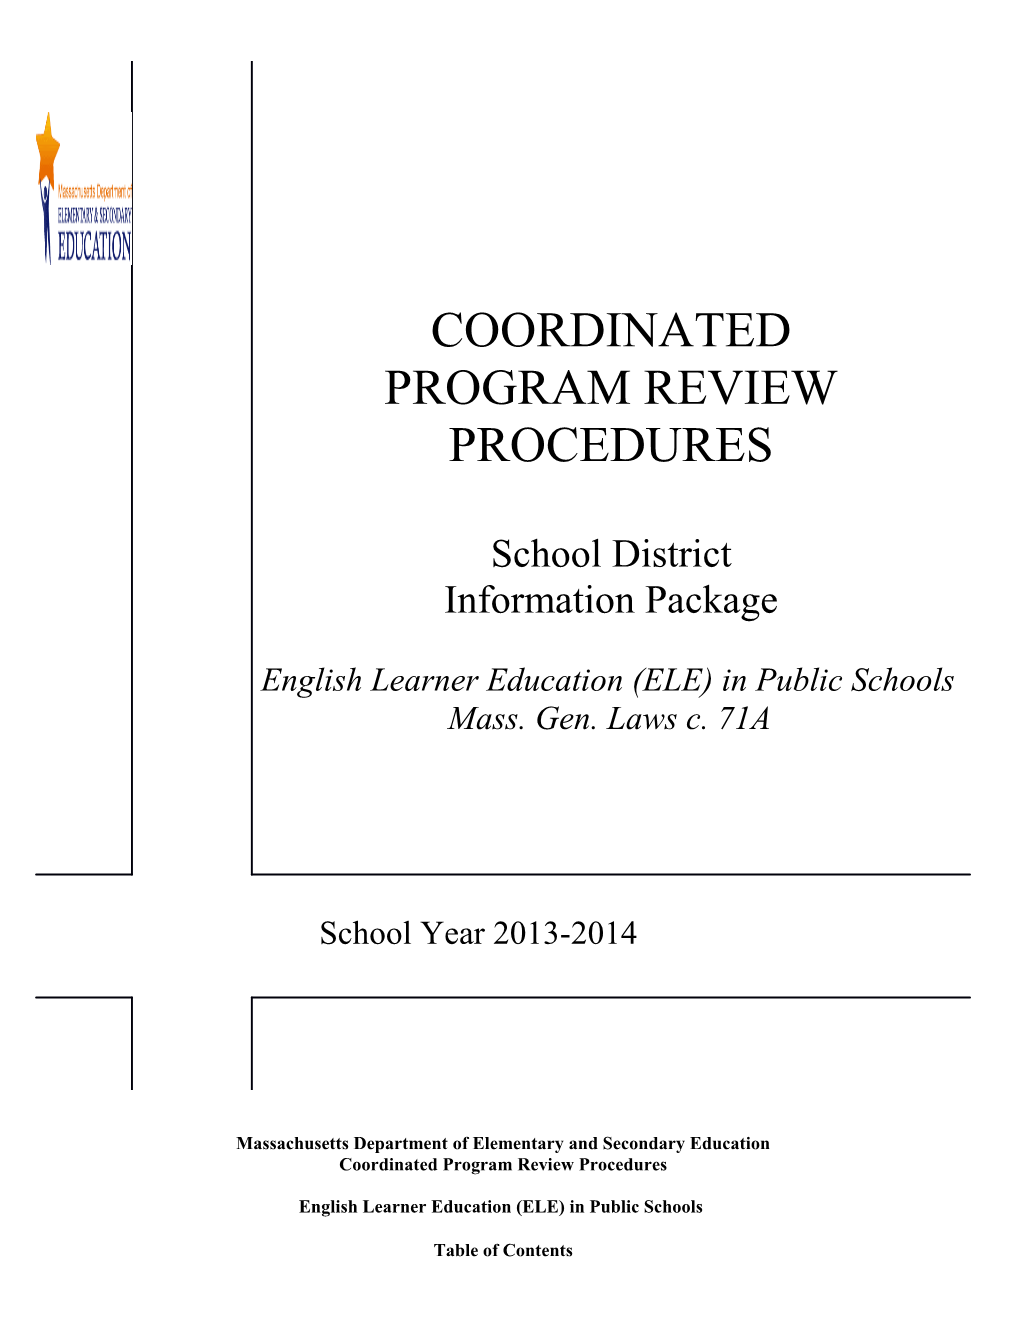 ELE Information Package 2013-2014